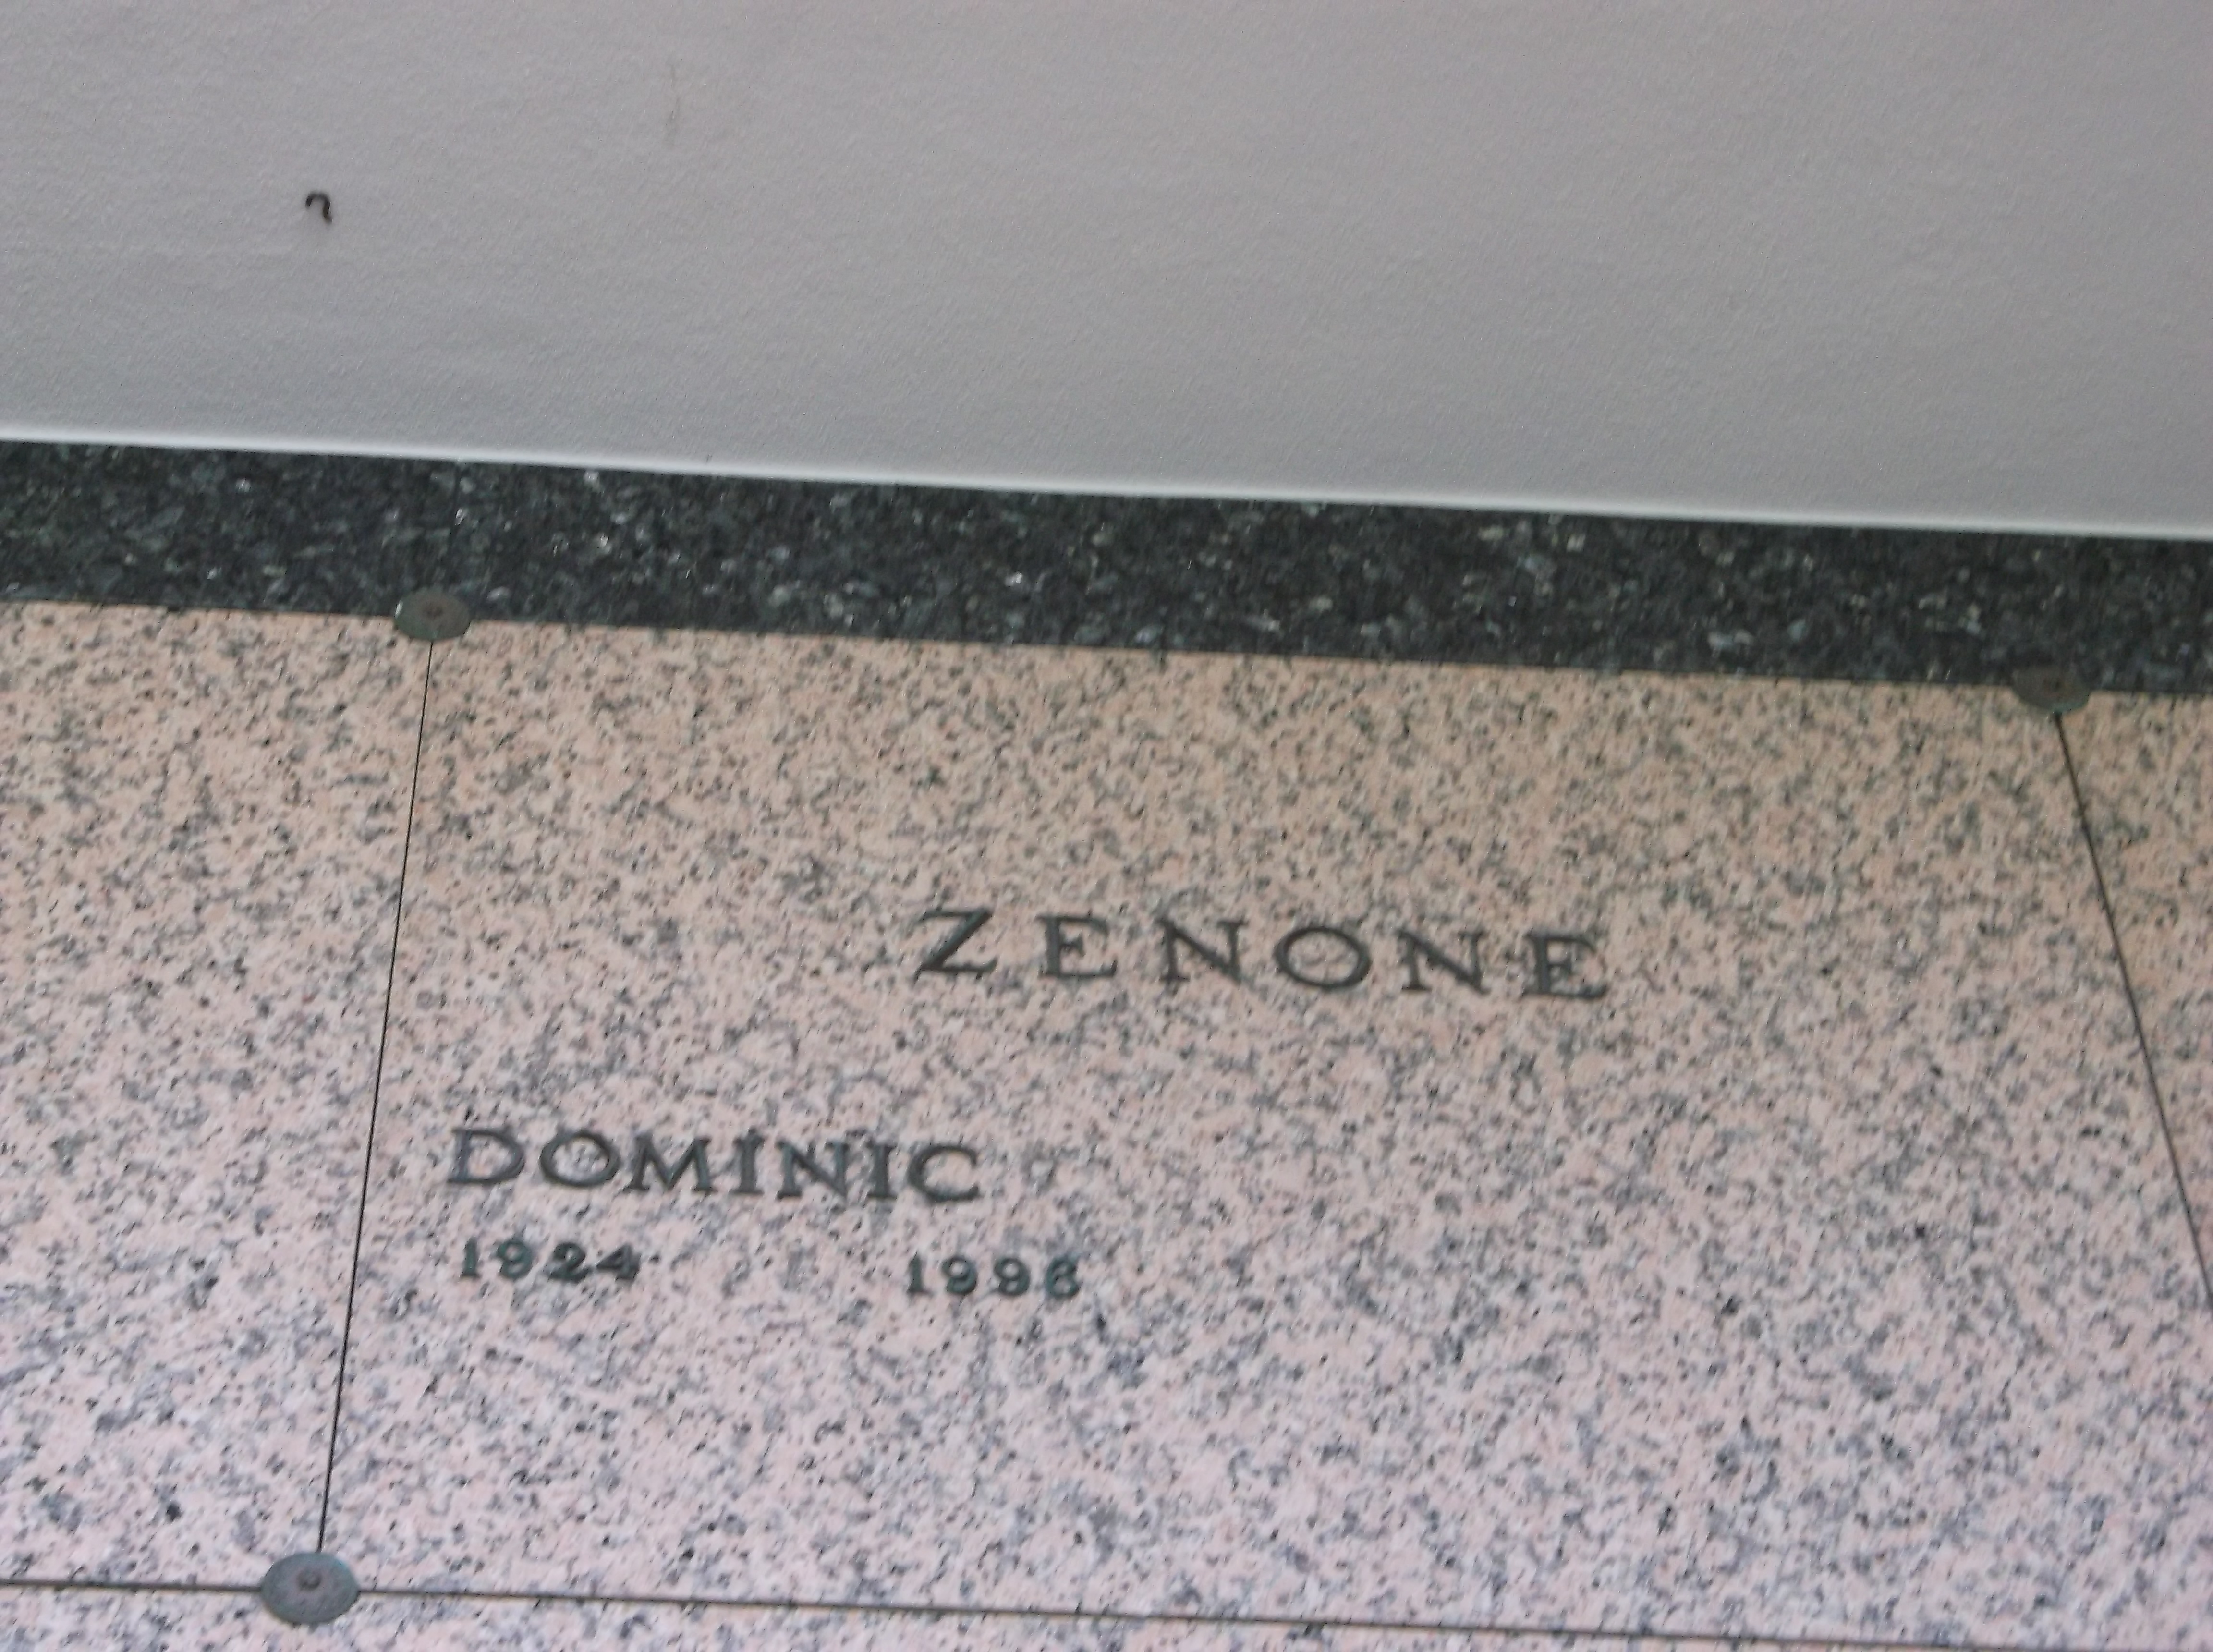 Dominic Zenone